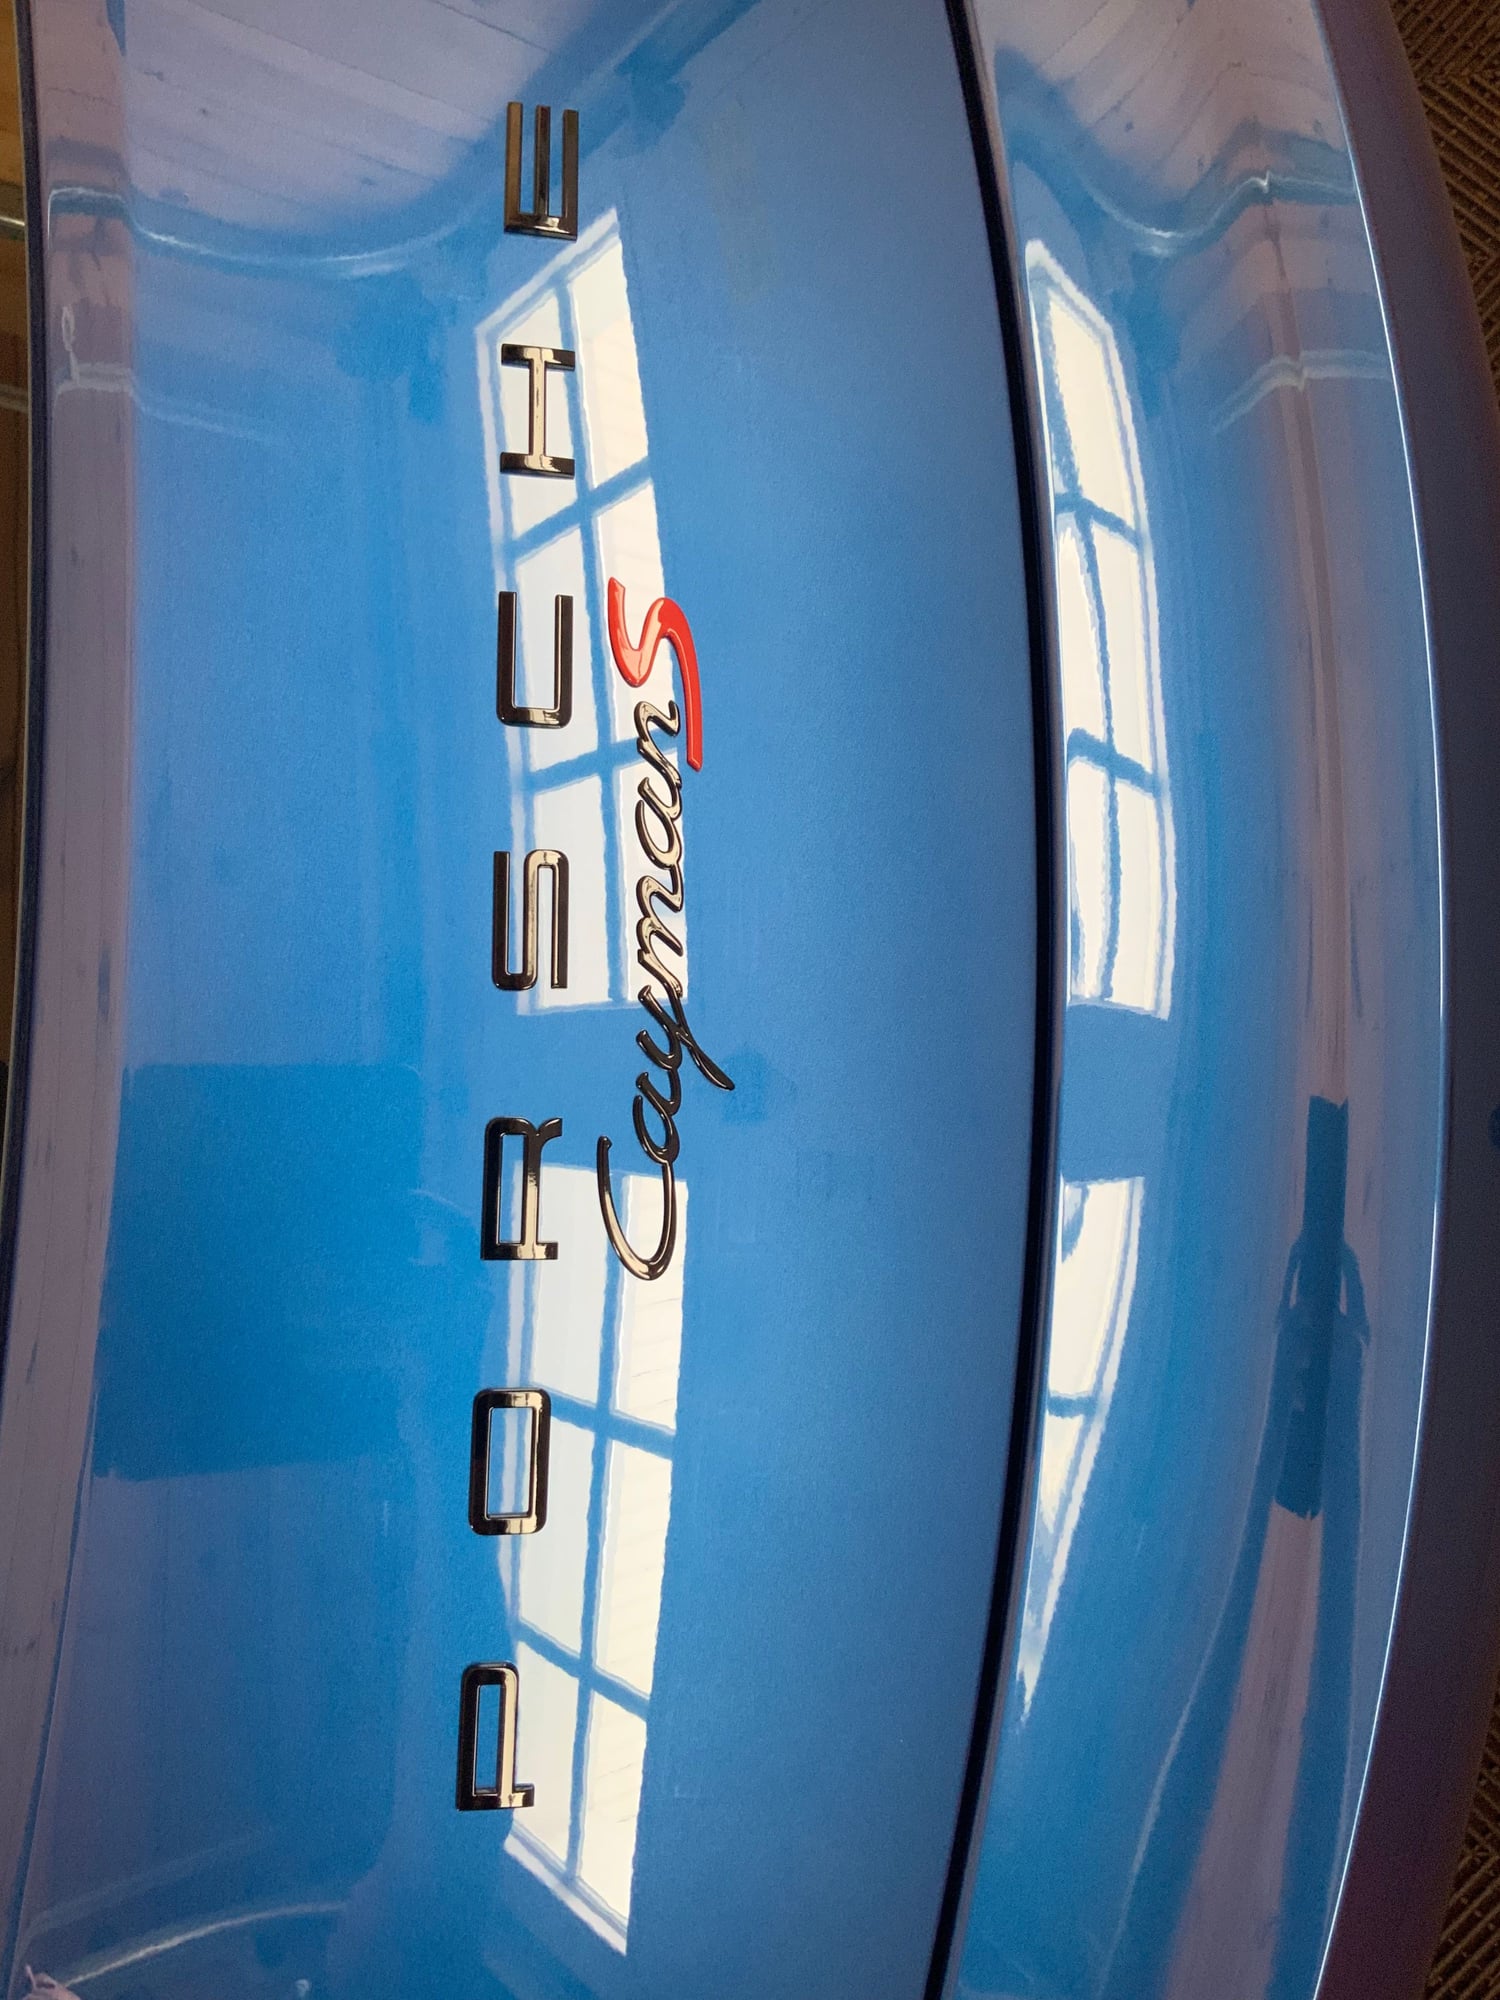 2014 Porsche Cayman - Feeler: 2014 Cayman S Manual 7k Miles Mint - Used - VIN WP0AB2A86EK193457 - 7,215 Miles - 6 cyl - 2WD - Manual - Coupe - Blue - Massapequa, NY 11758, United States